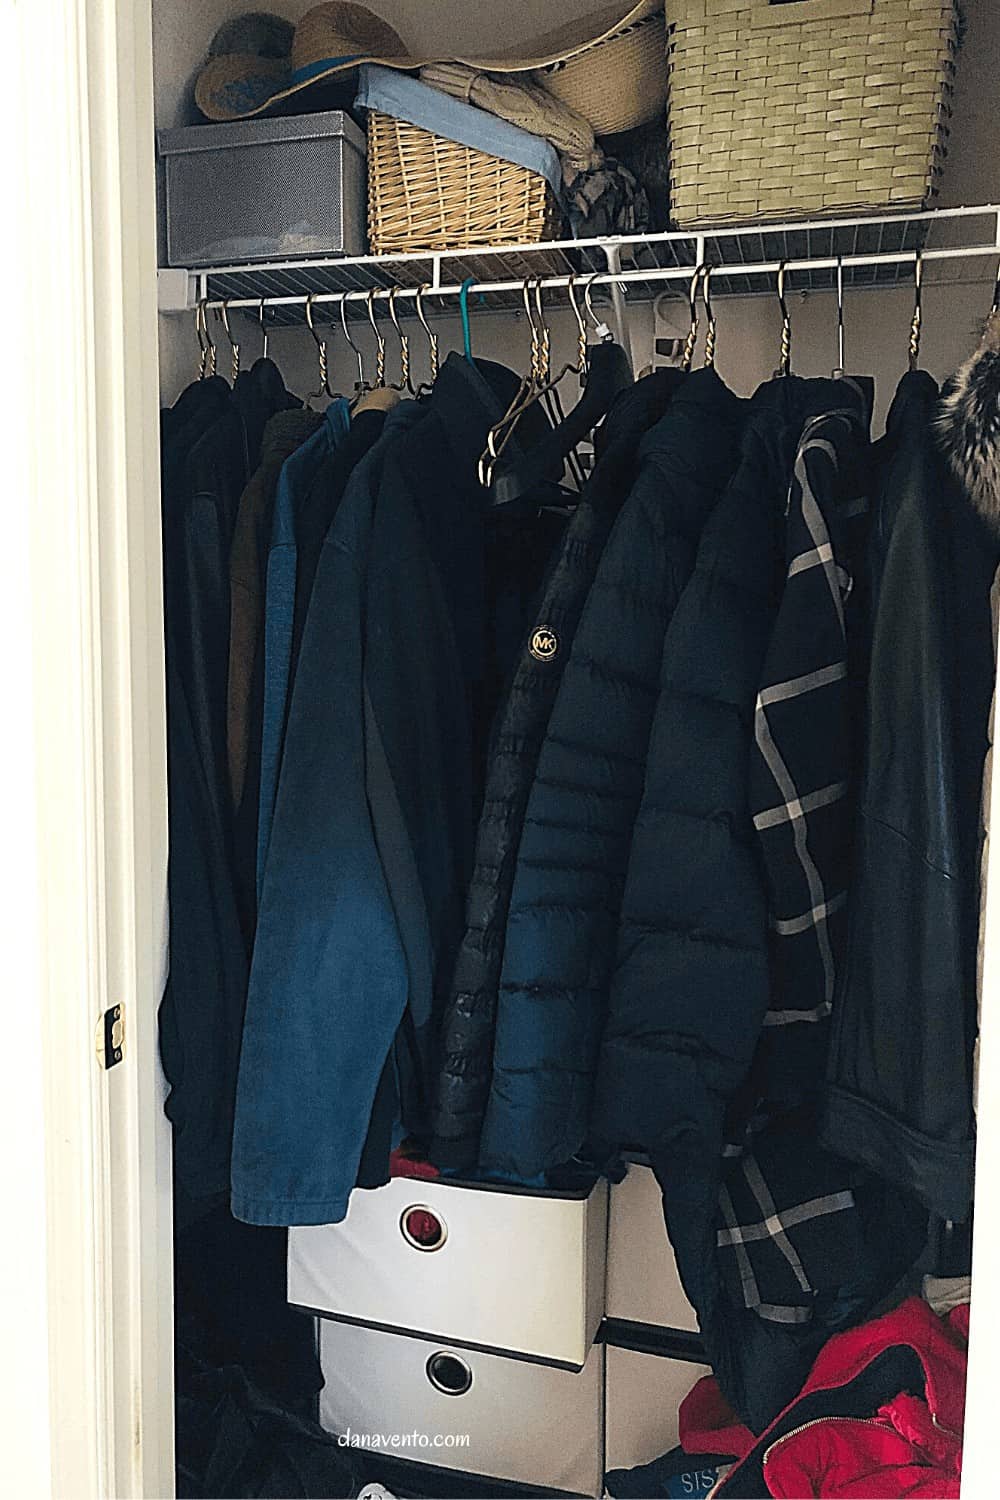 disorganized coat closet